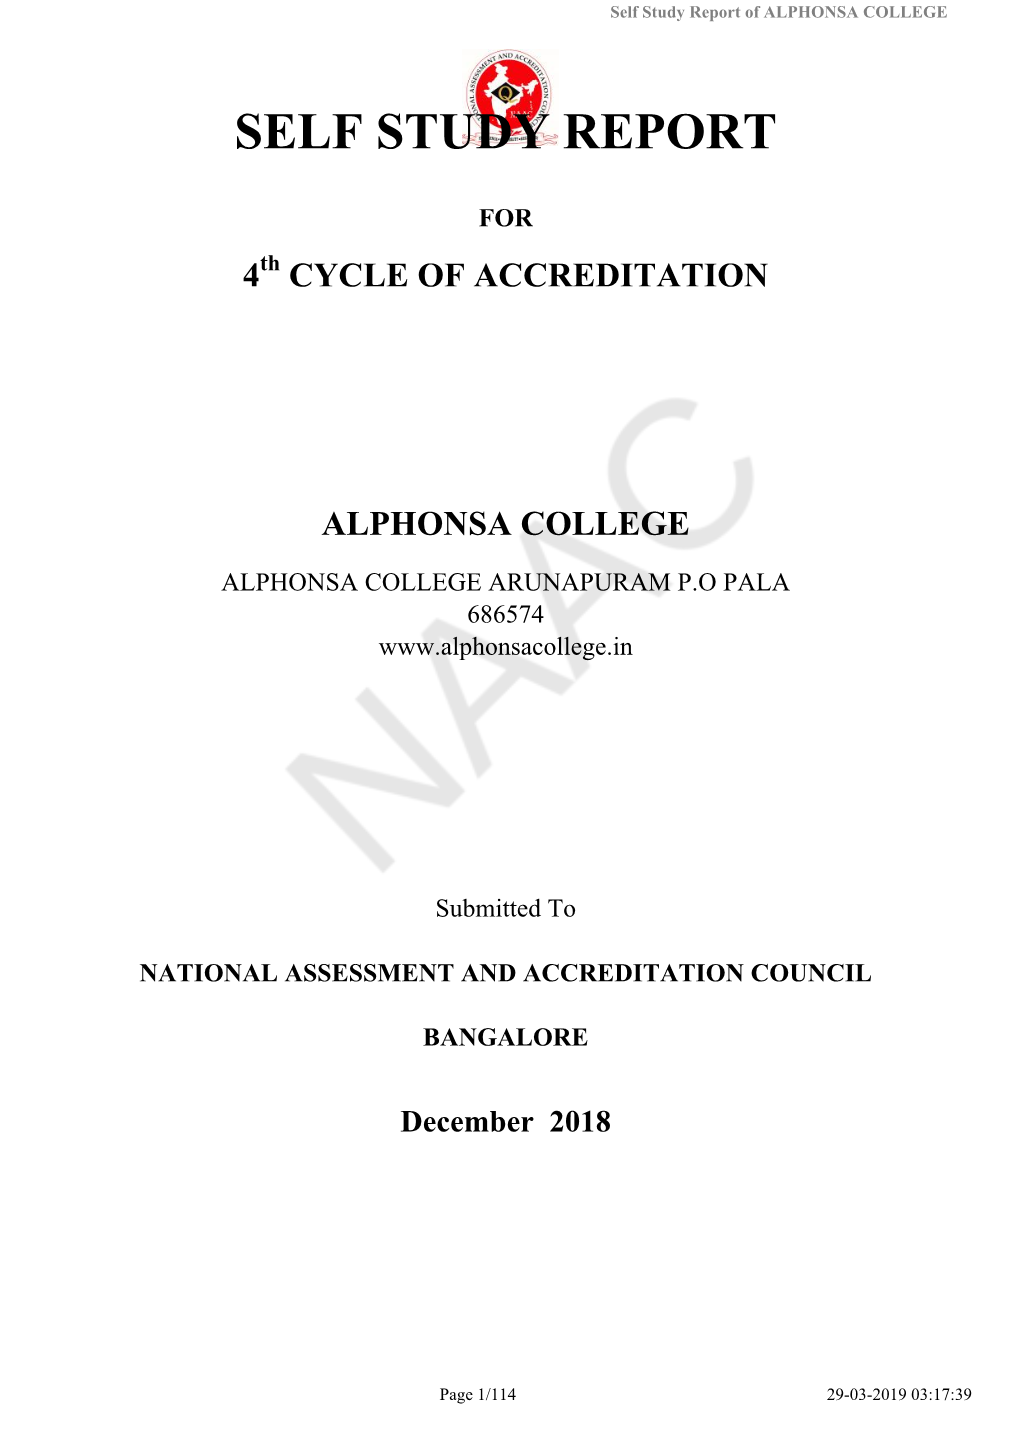 Self Study Report of ALPHONSA COLLEGE